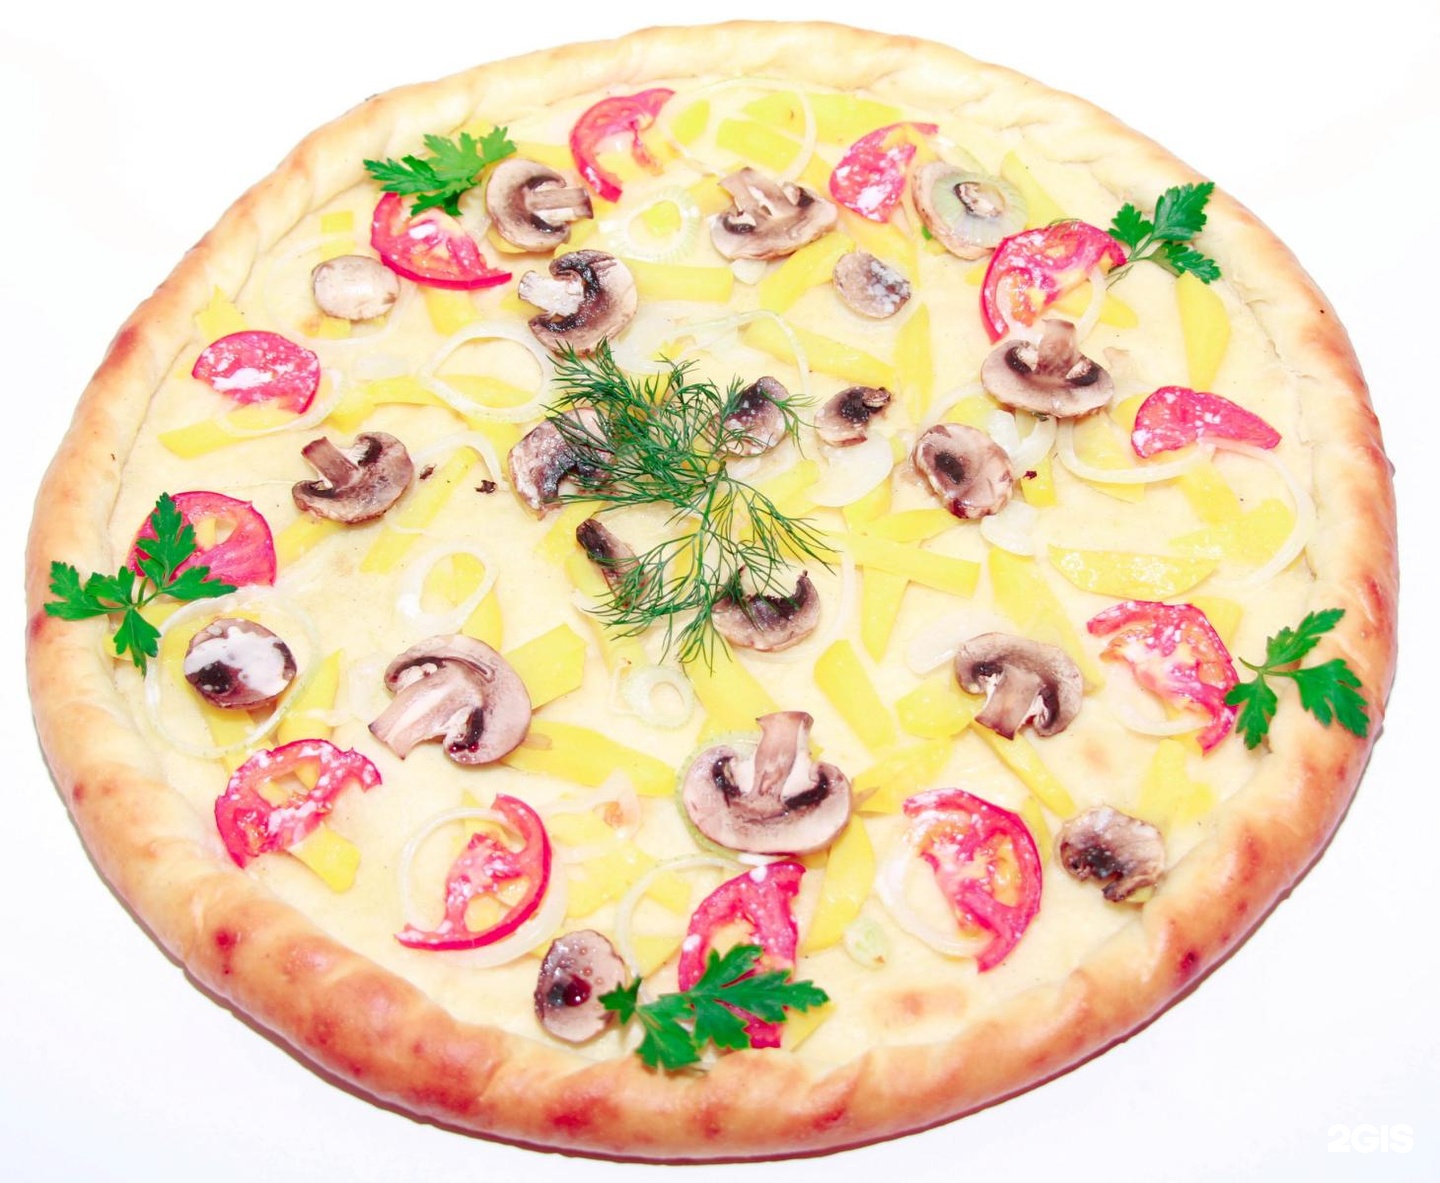 челентано пицца рецепты фото 101